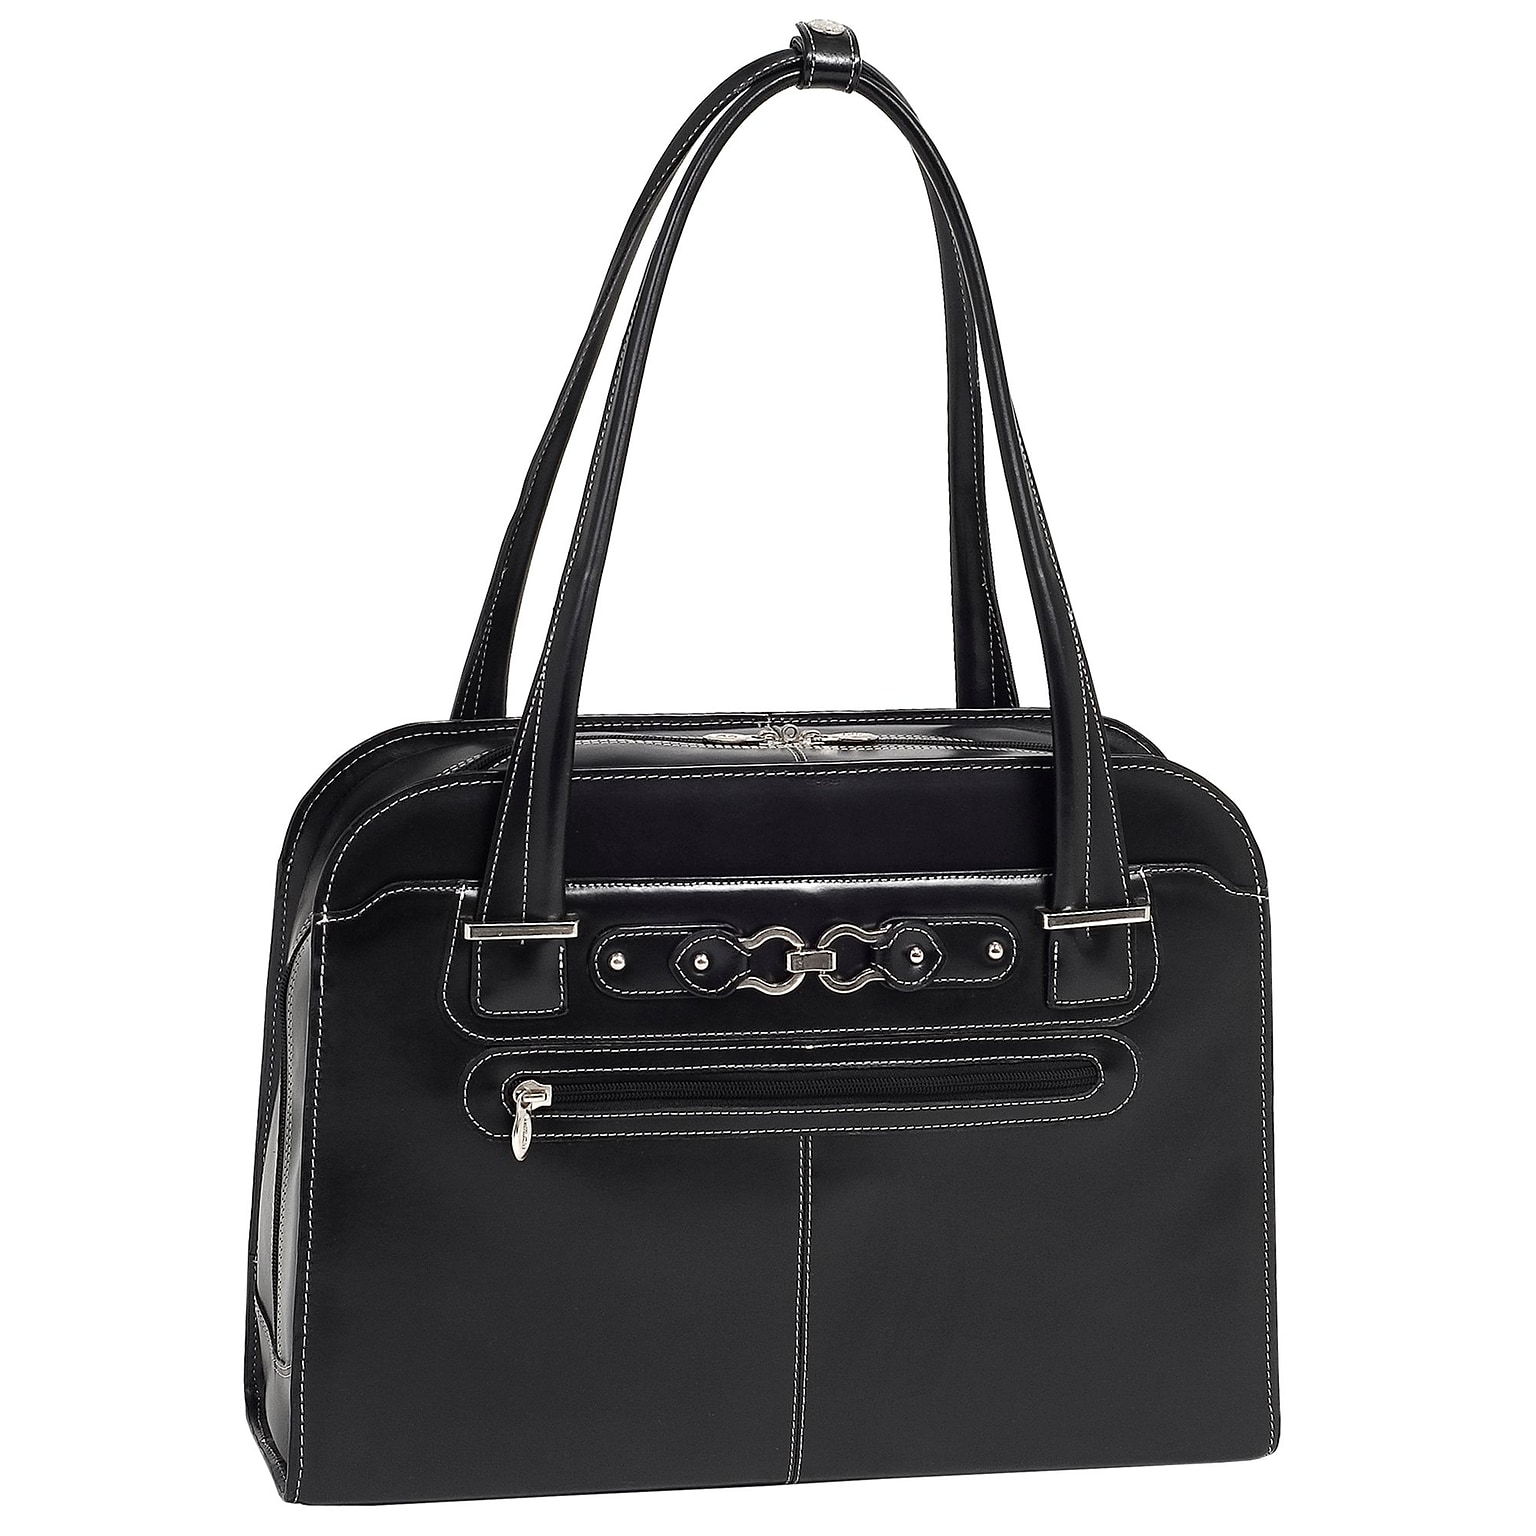 McKlein W Series Oak Grove Ladies Laptop Handbag, Black Trimmed In Sand Leather (96635)